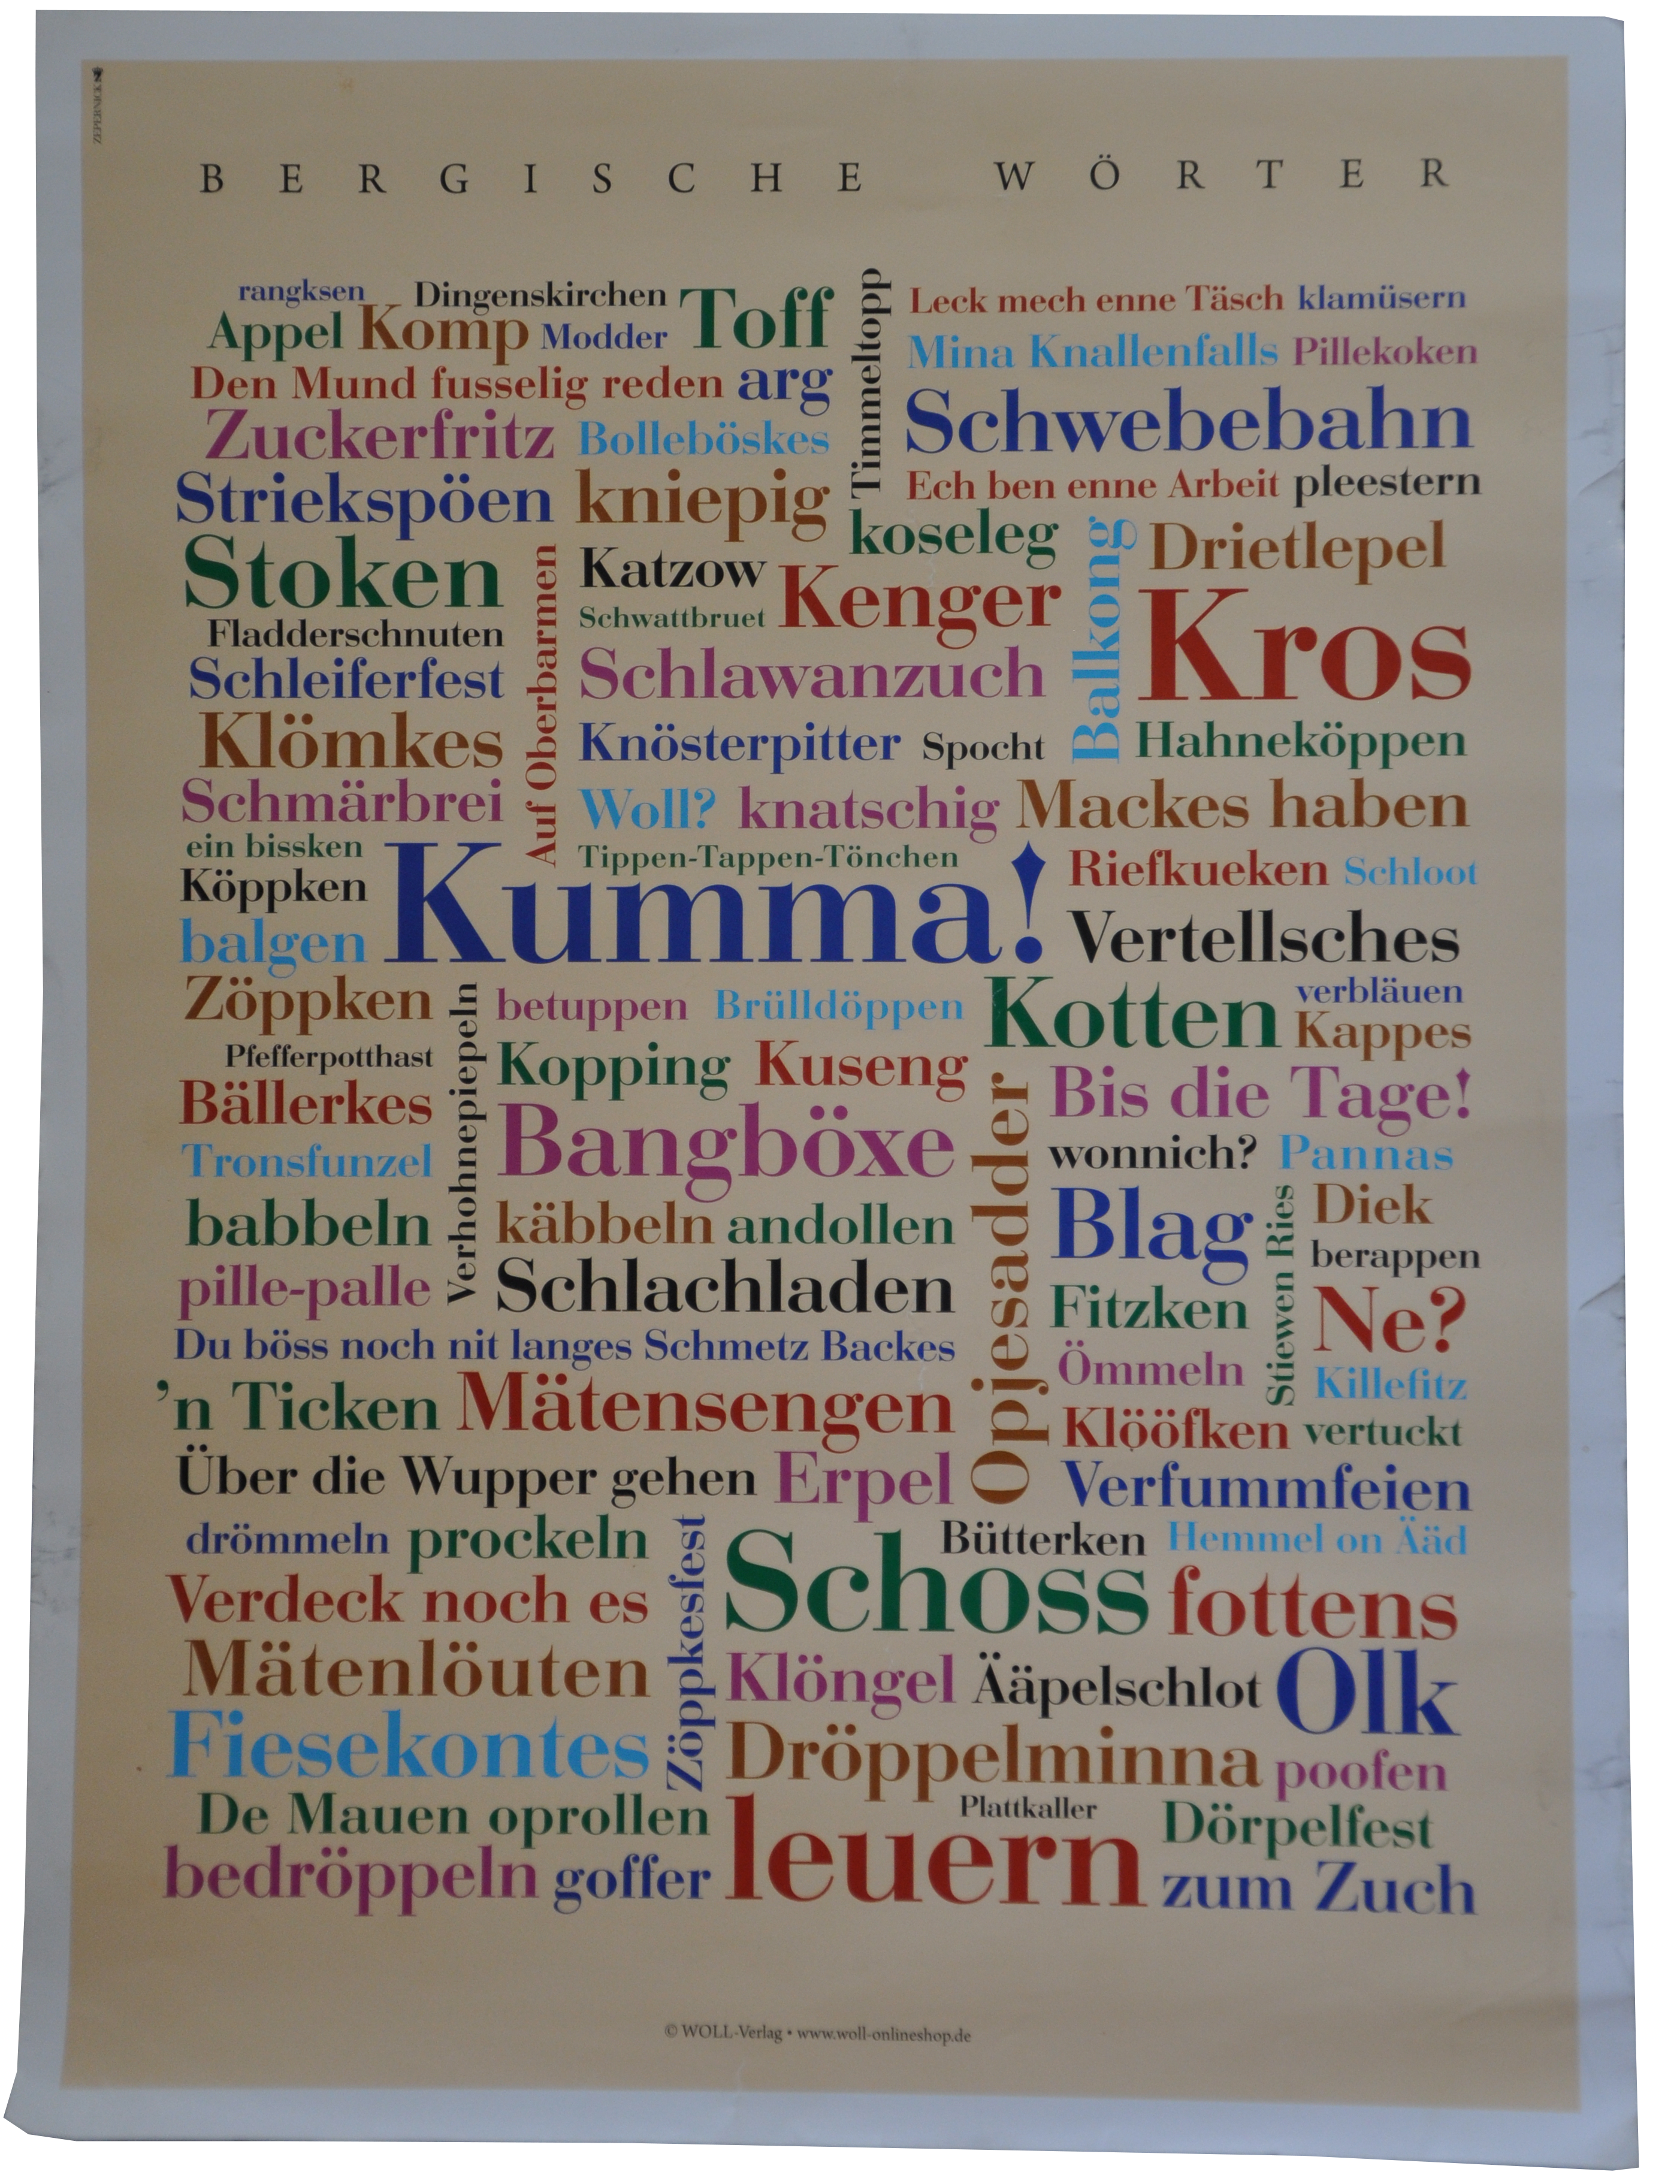 Poster Bergische Wörter groß 50x70 cm